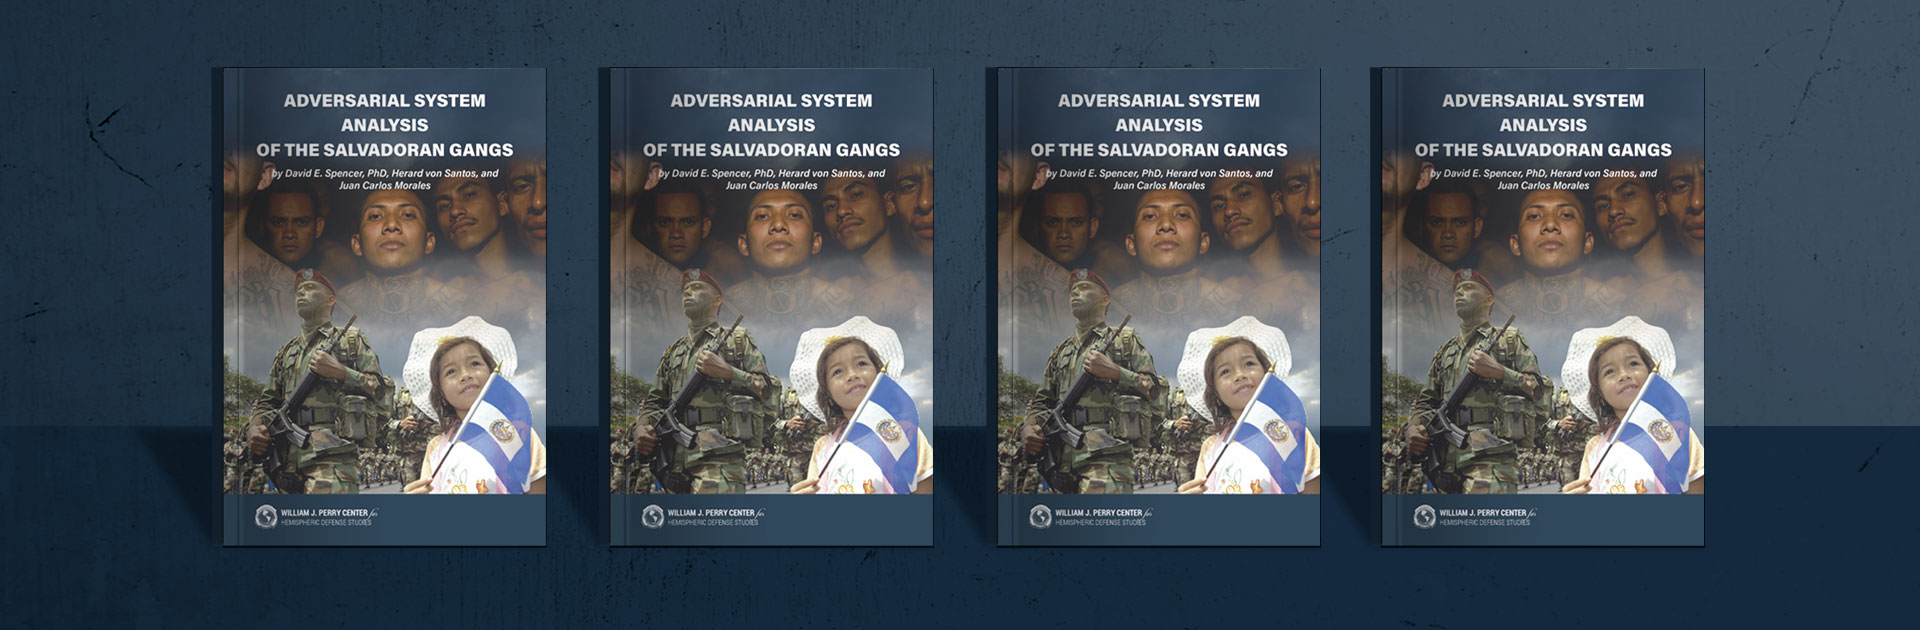 Adversarial System Analysis of the Salvadoran Gangs